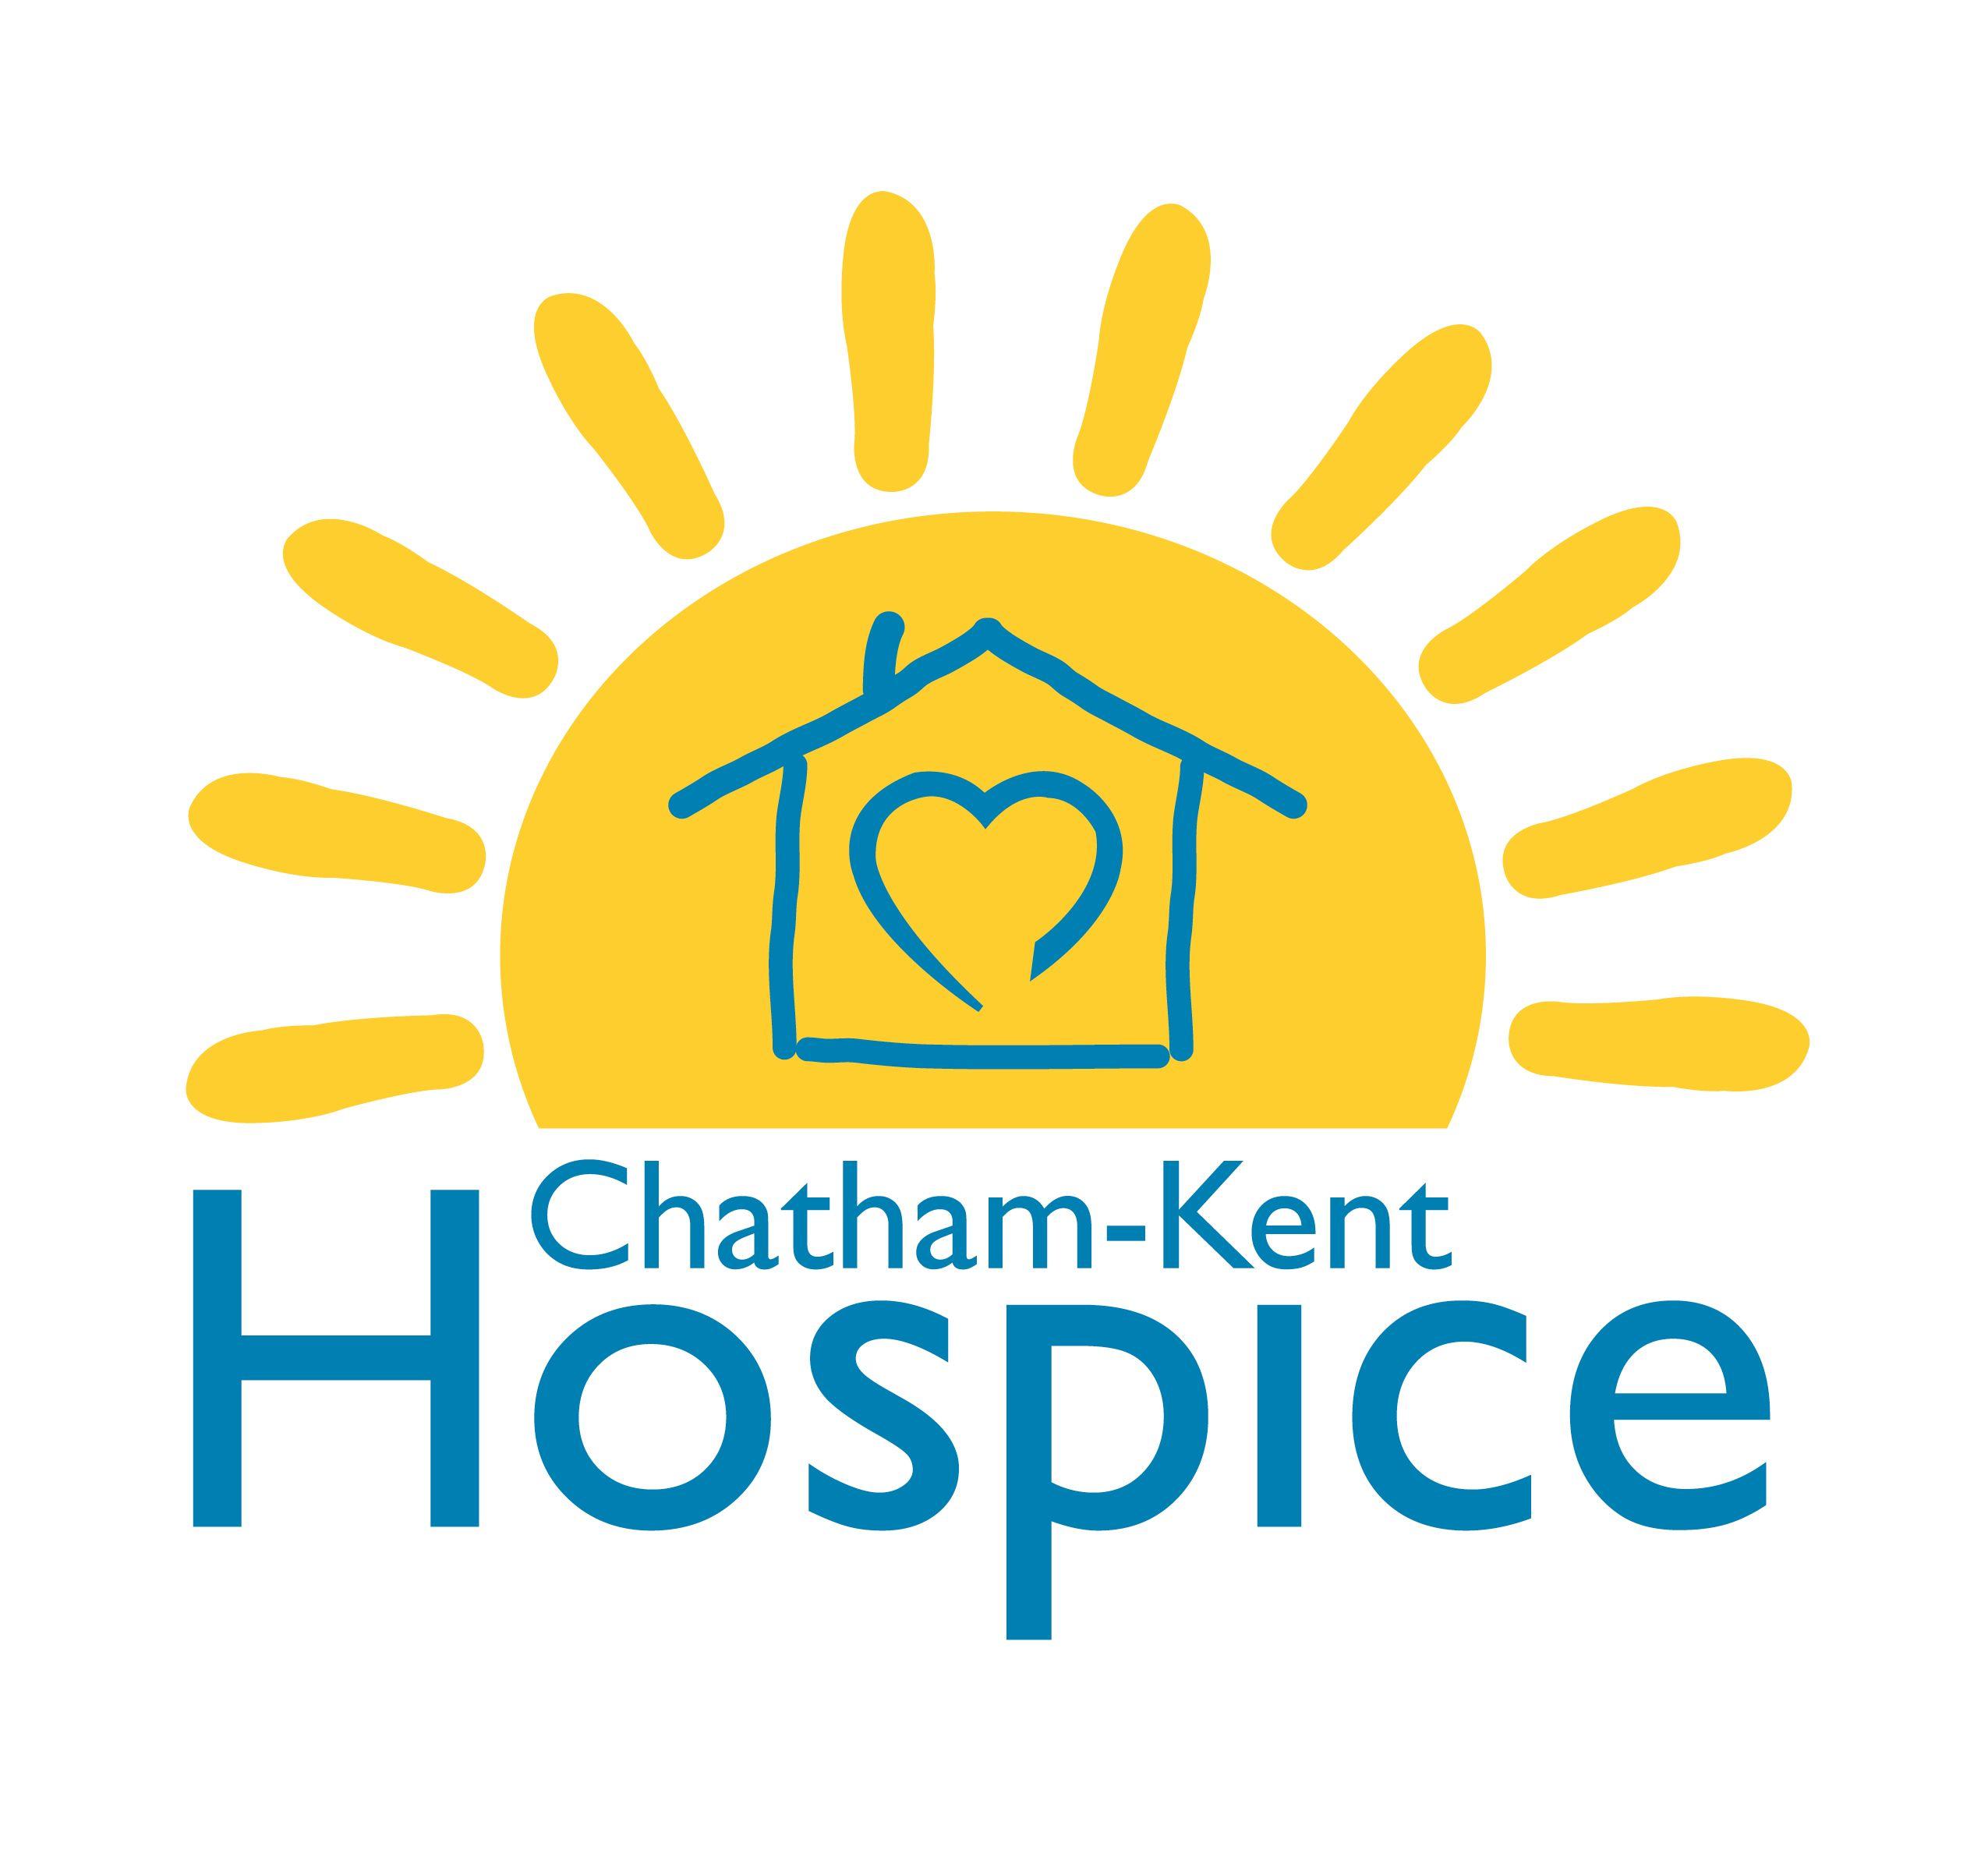 Chatham-Kent Logo - Hospice Education Campaign - Chatham-Kent Hospice